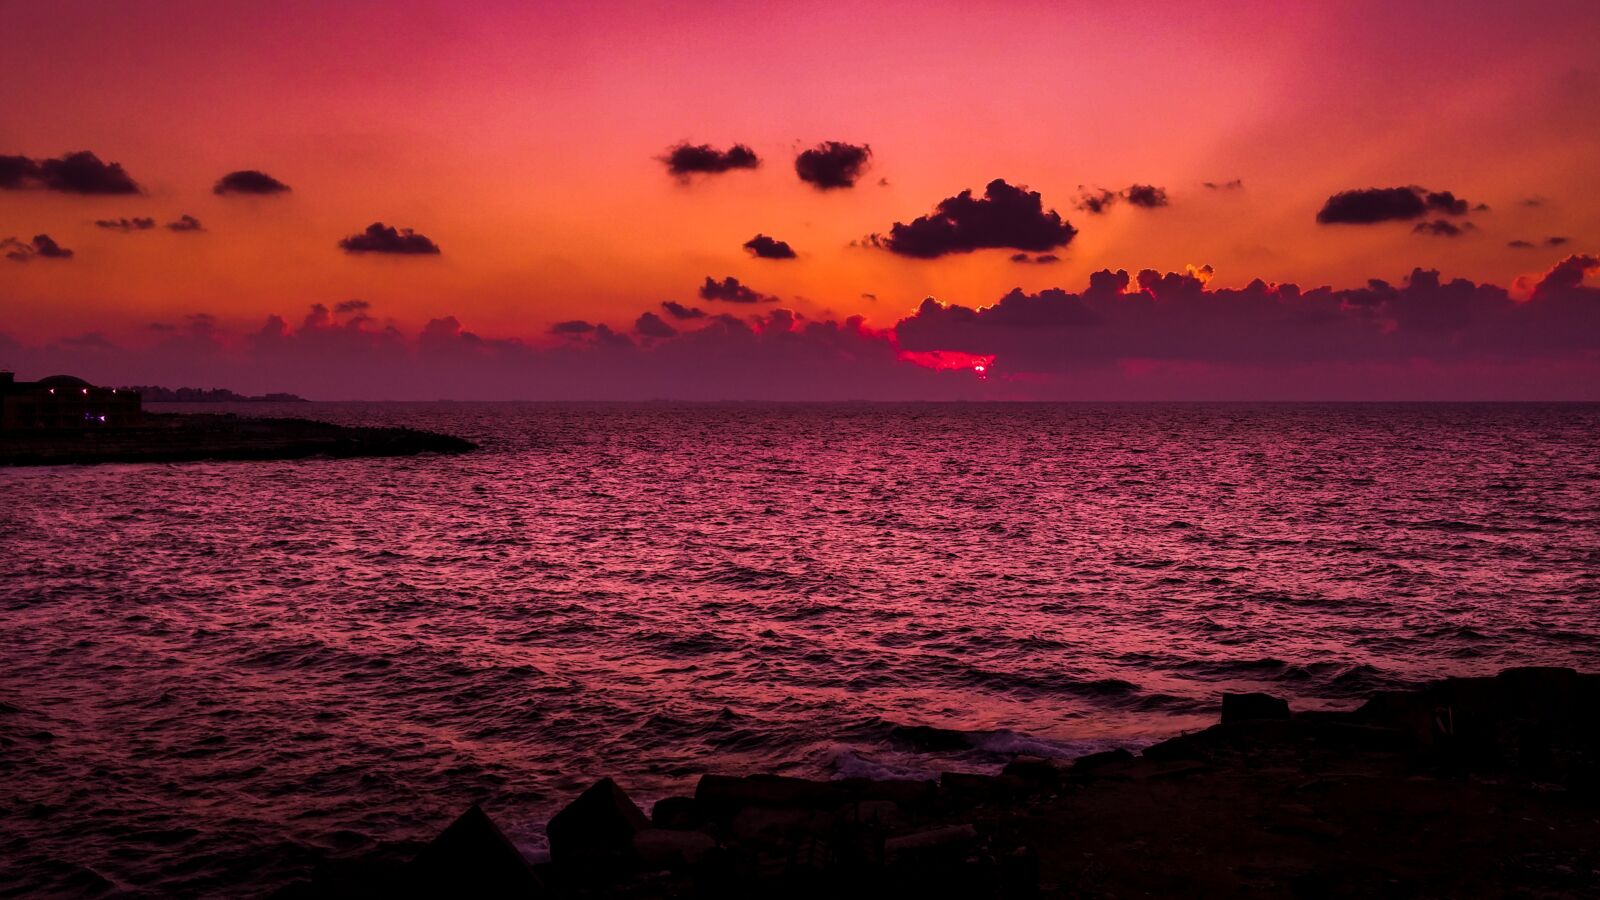 LG G3 sample photo. Alexandria, sea, sunset photography